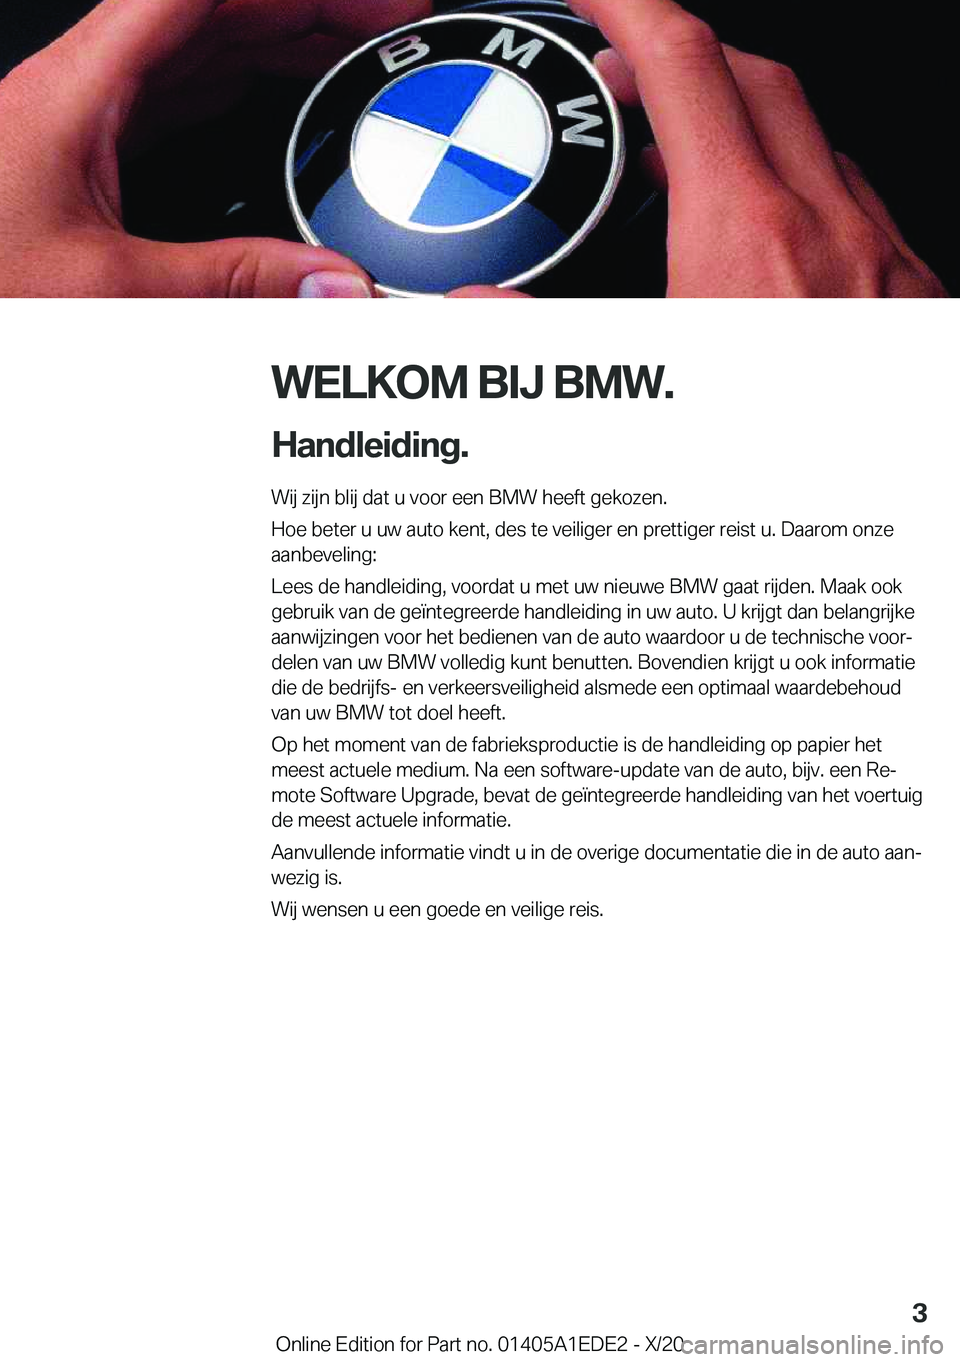 BMW 8 SERIES CONVERTIBLE 2021  Instructieboekjes (in Dutch) �W�E�L�K�O�M��B�I�J��B�M�W�.
�H�a�n�d�l�e�i�d�i�n�g�. �W�i�j��z�i�j�n��b�l�i�j��d�a�t��u��v�o�o�r��e�e�n��B�M�W��h�e�e�f�t��g�e�k�o�z�e�n�.
�H�o�e��b�e�t�e�r��u��u�w��a�u�t�o��k�e�n�t�